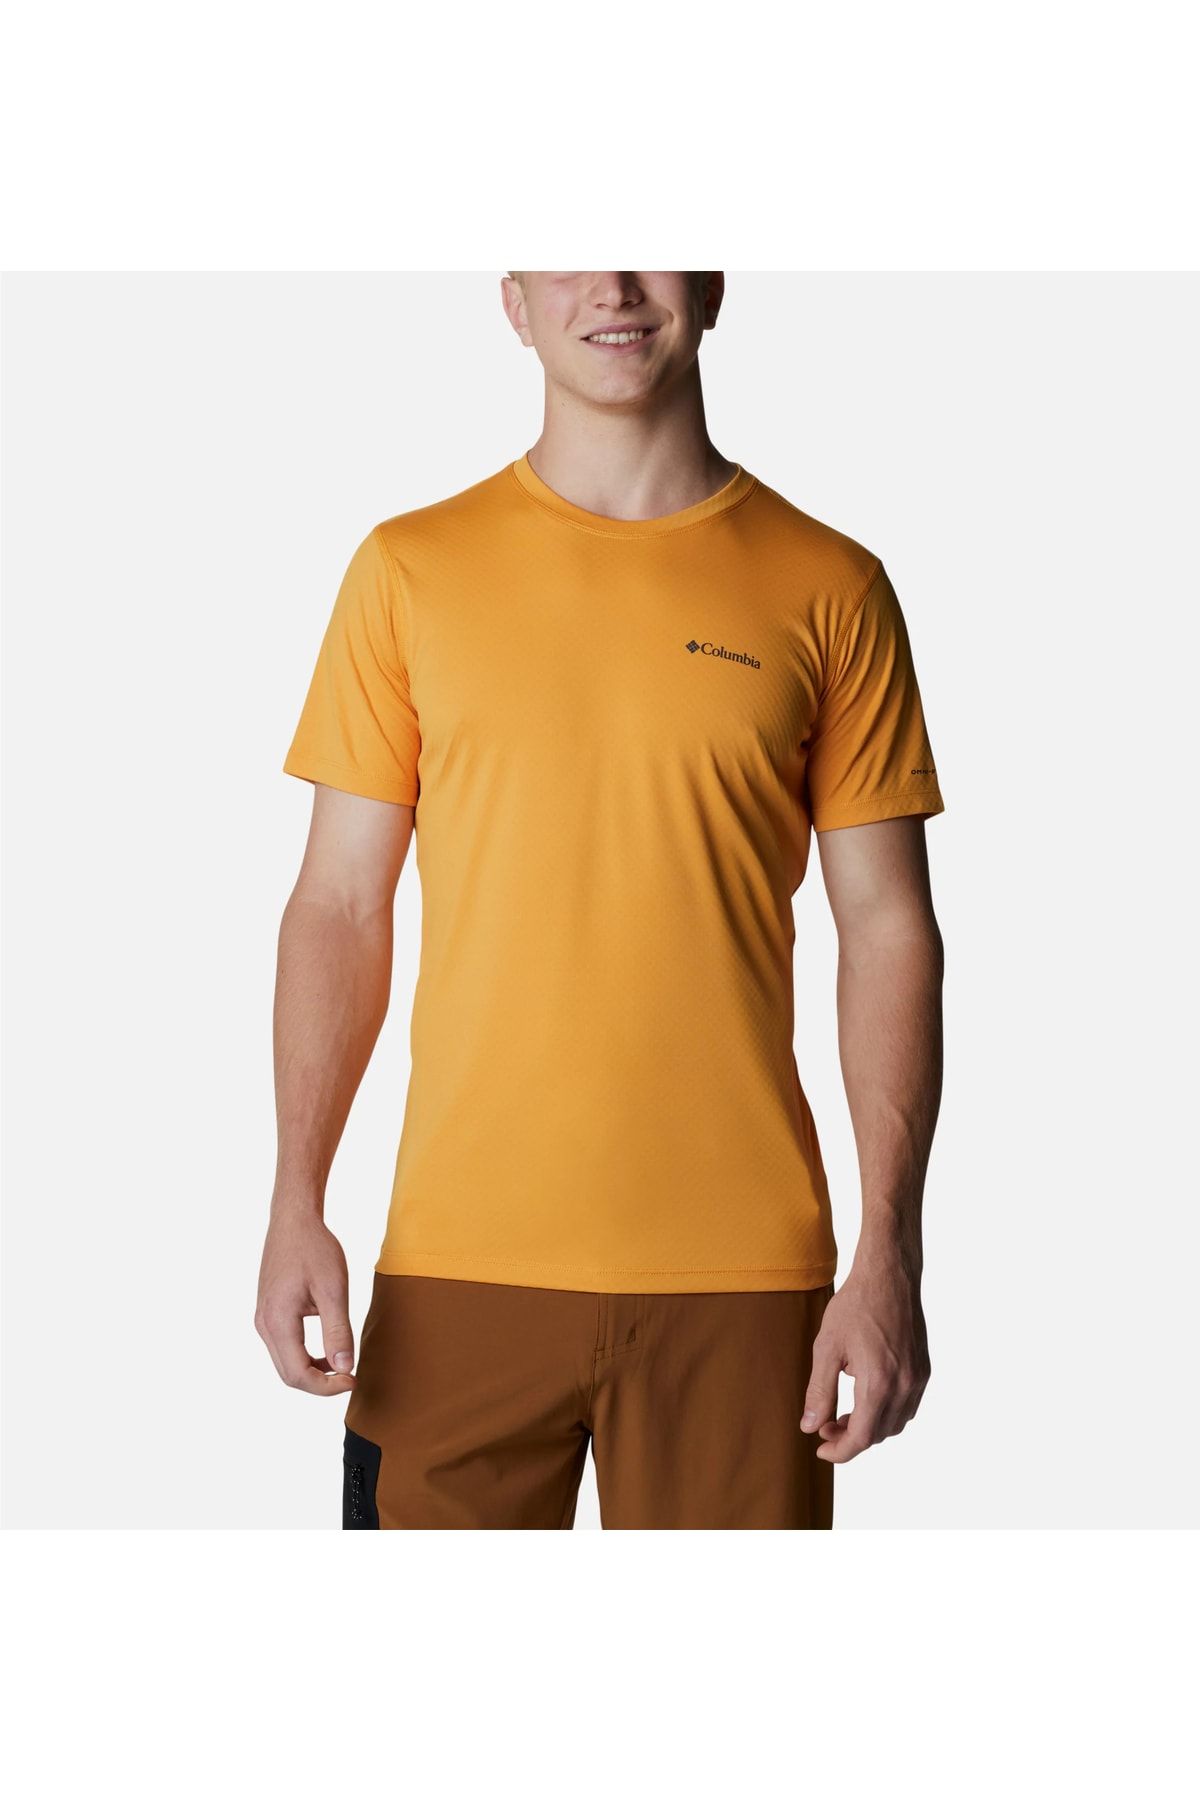 Columbia - Zero Rules Short Sleeve Shirt - Am6084-880